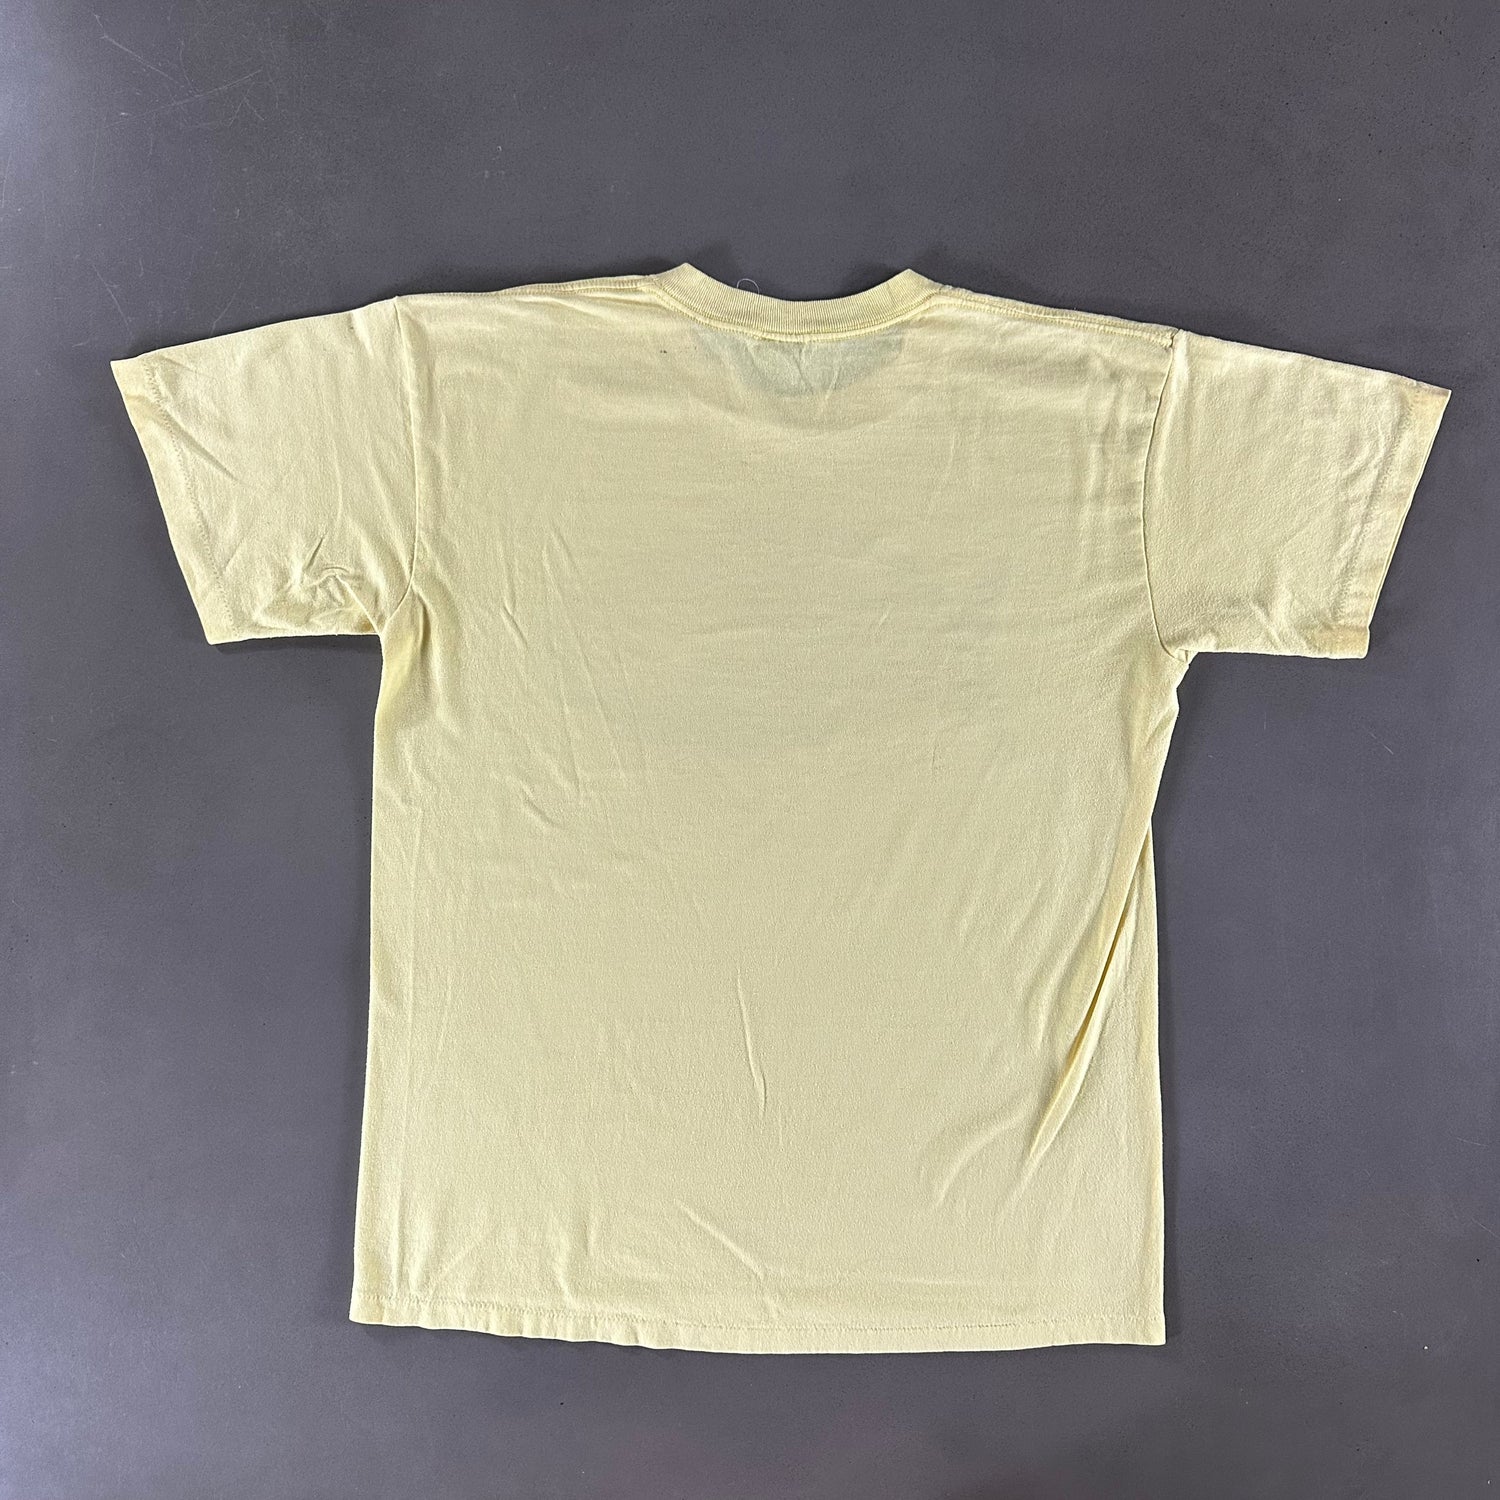 Vintage 1994 South Padre Island T-shirt size Large